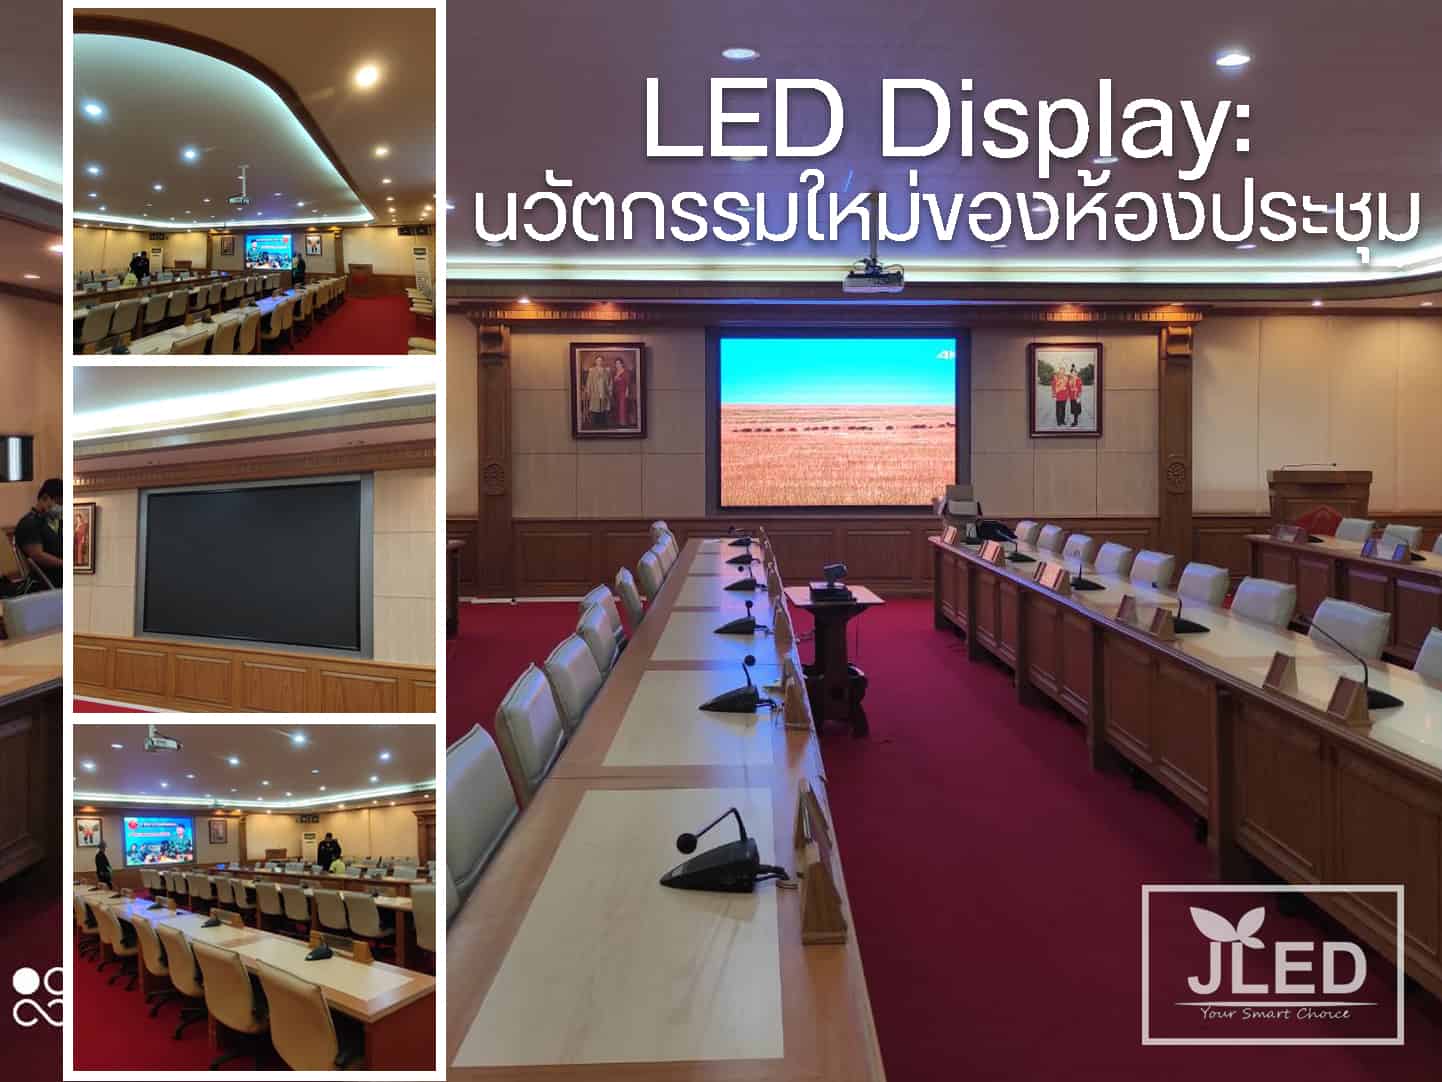 LED Display นวัตกรรมใหม่ของห้องประชุม jled